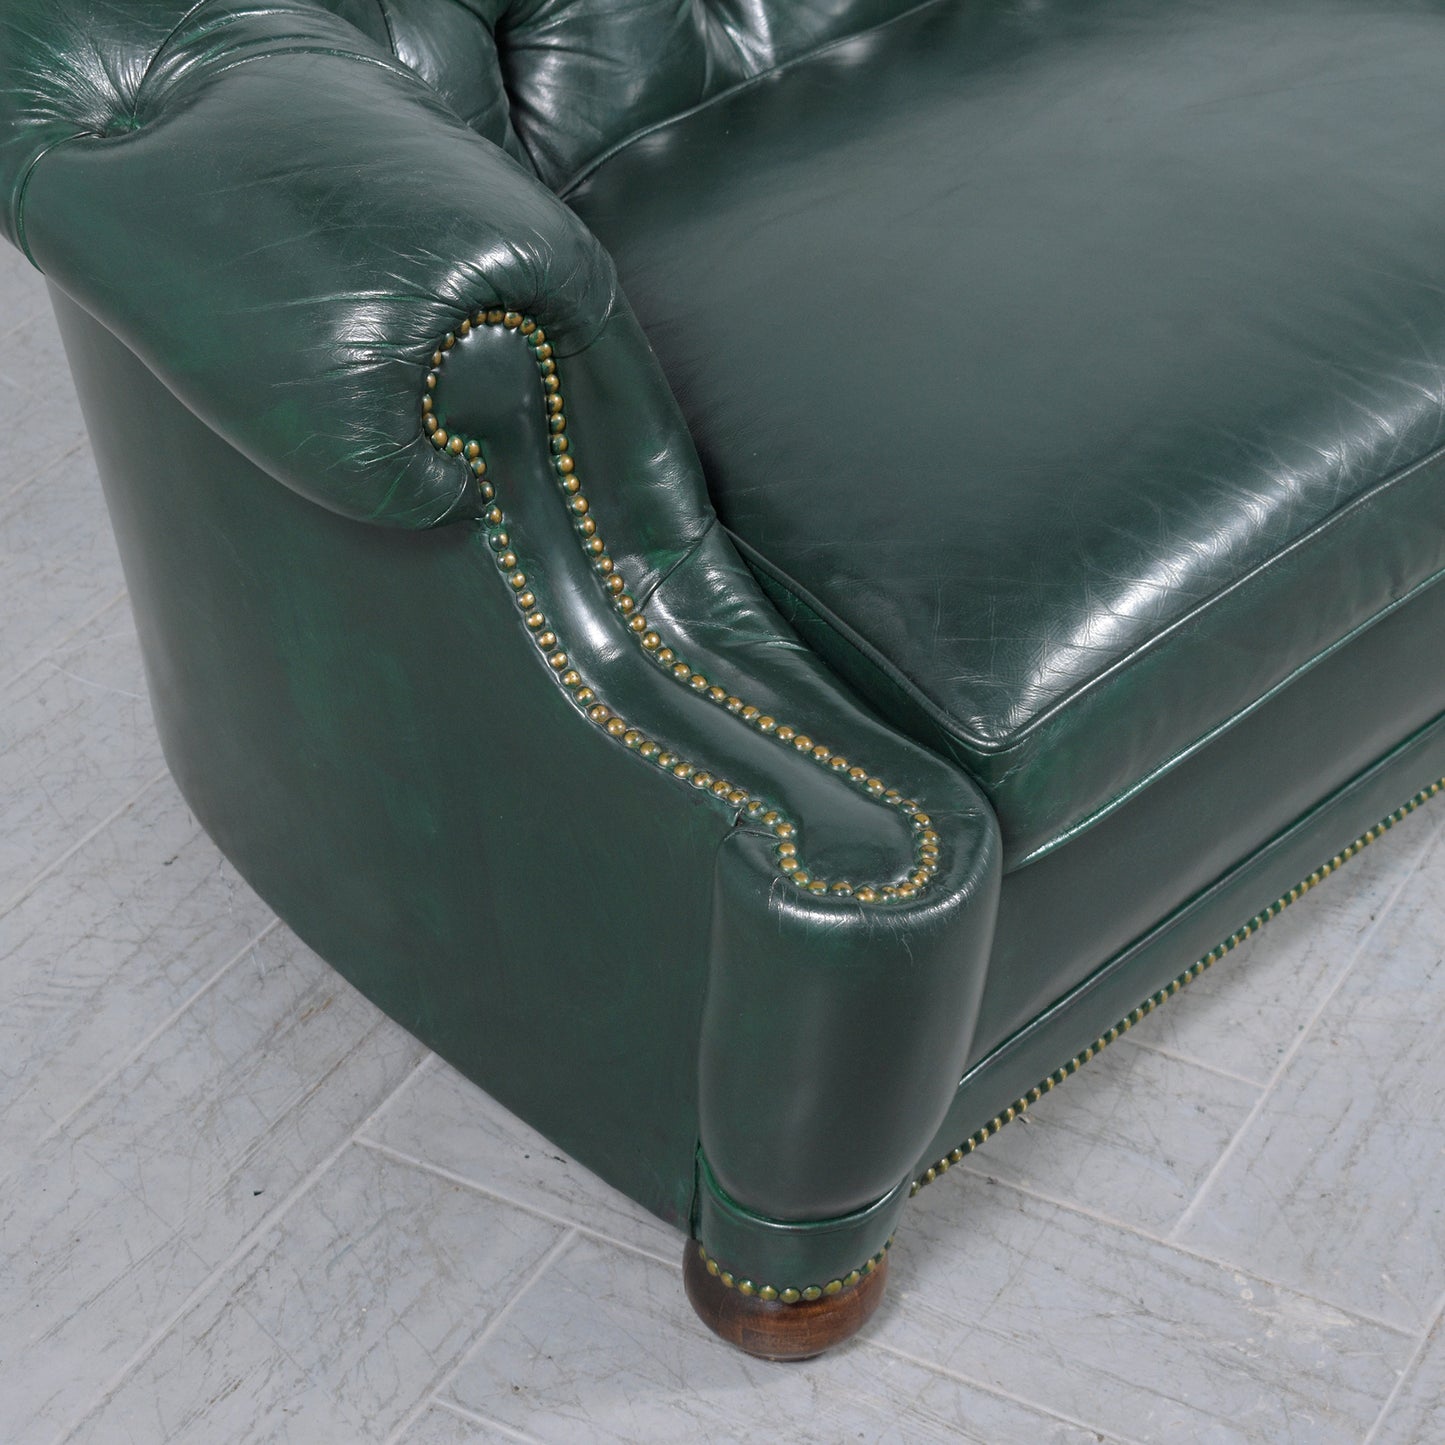 Green Vintage Chesterfield Leather Sofa - Refurbished 1970s Italian Elegance